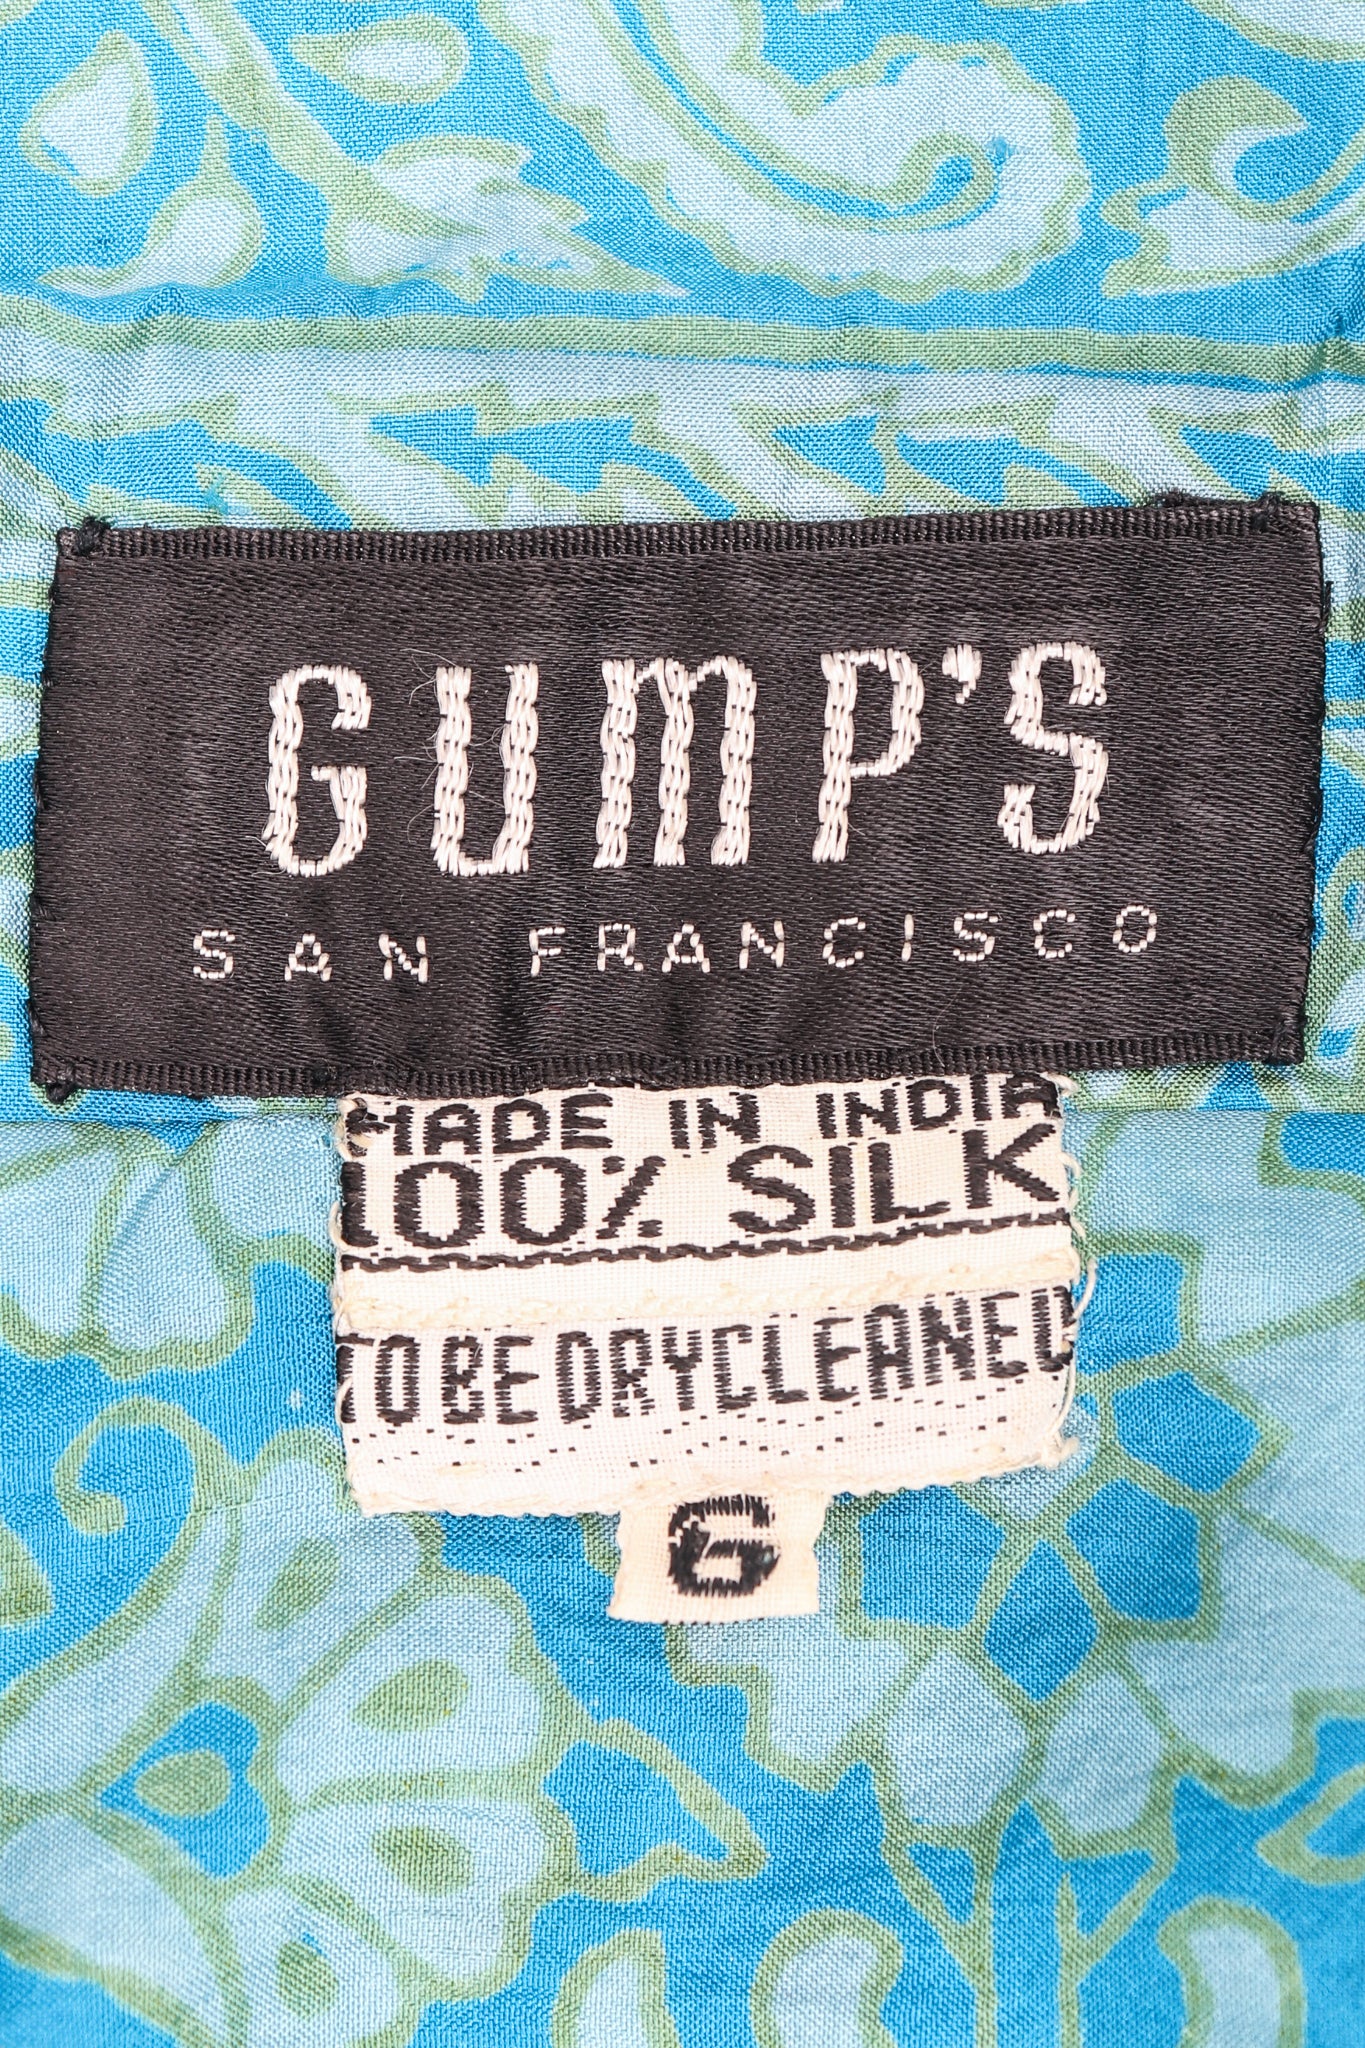 Recess Los Angeles Designer Consignment Vintage Gumps San Francisco Paisley Silk Shirtwaist Dress